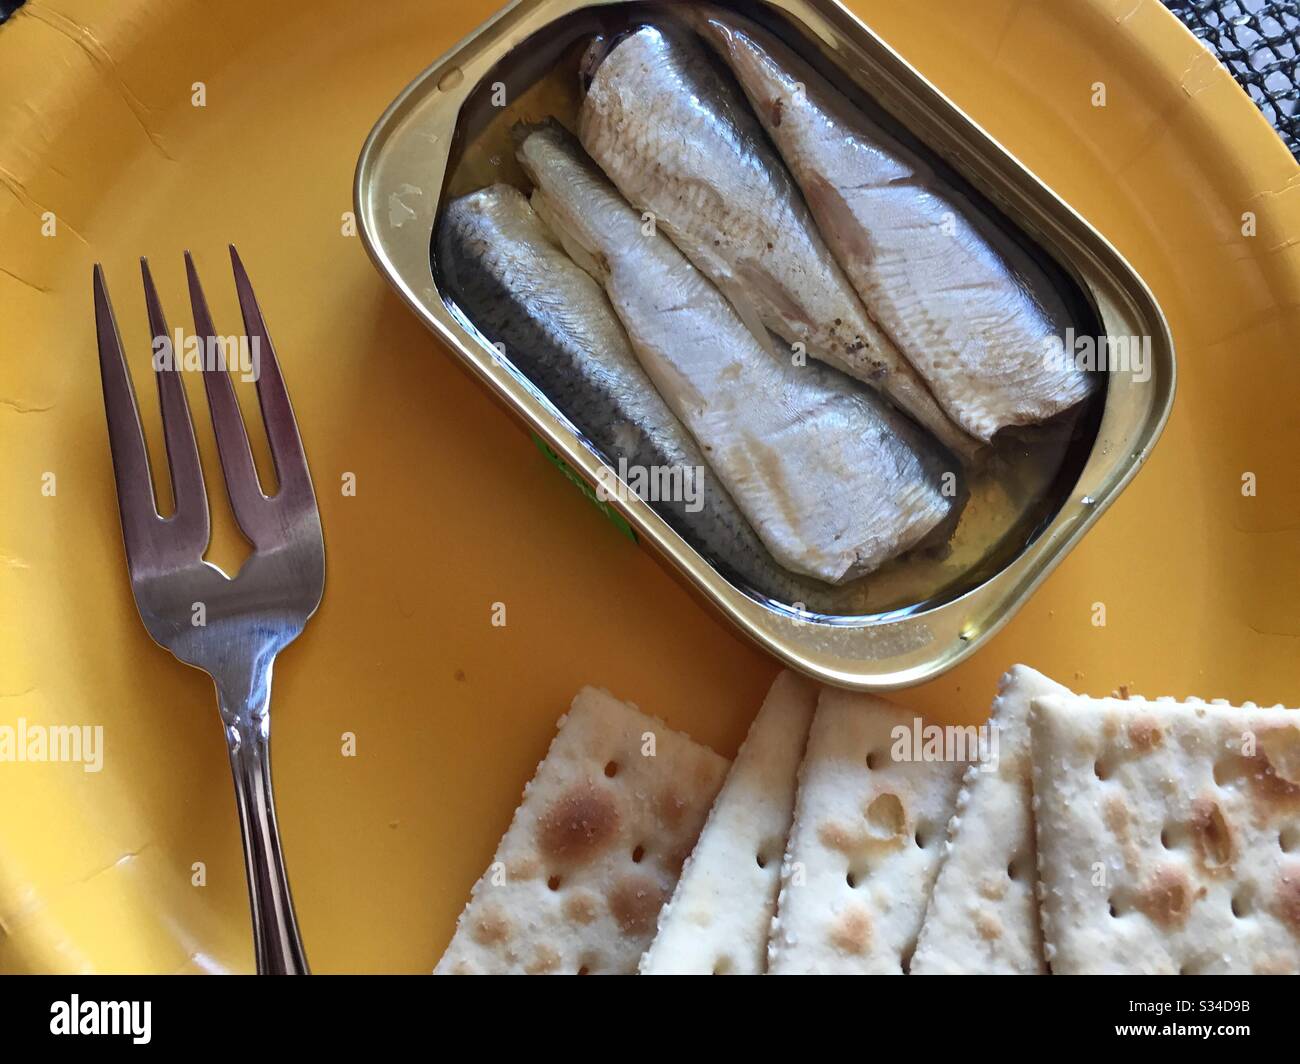 Sardines on Crackers